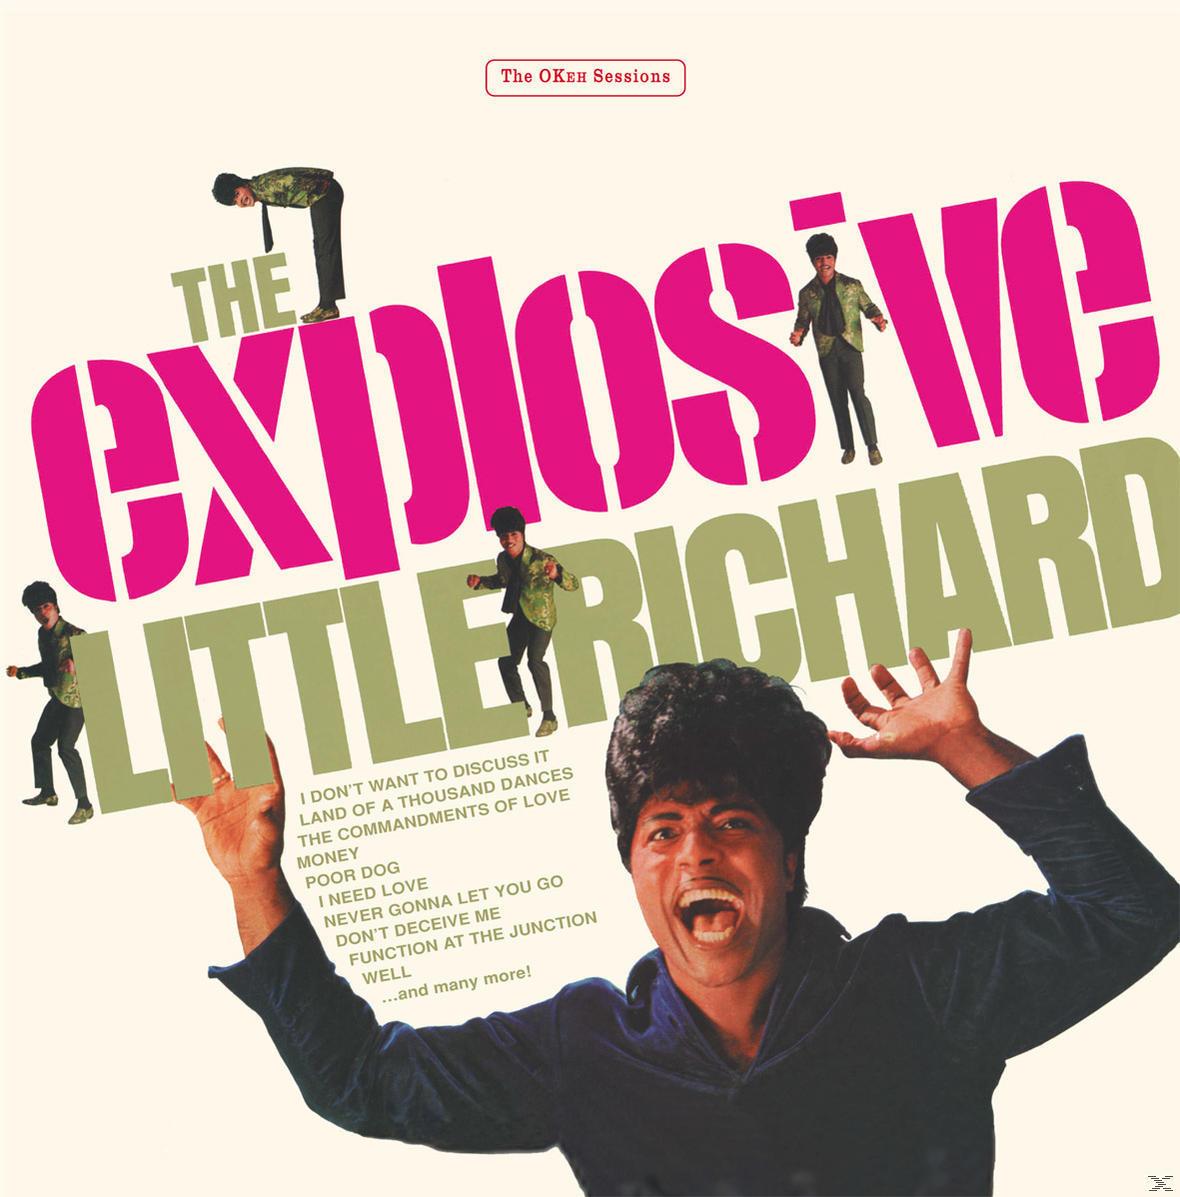 Little Richard - Explosive The Richard! (2-LP Little (Vinyl) - 180g)